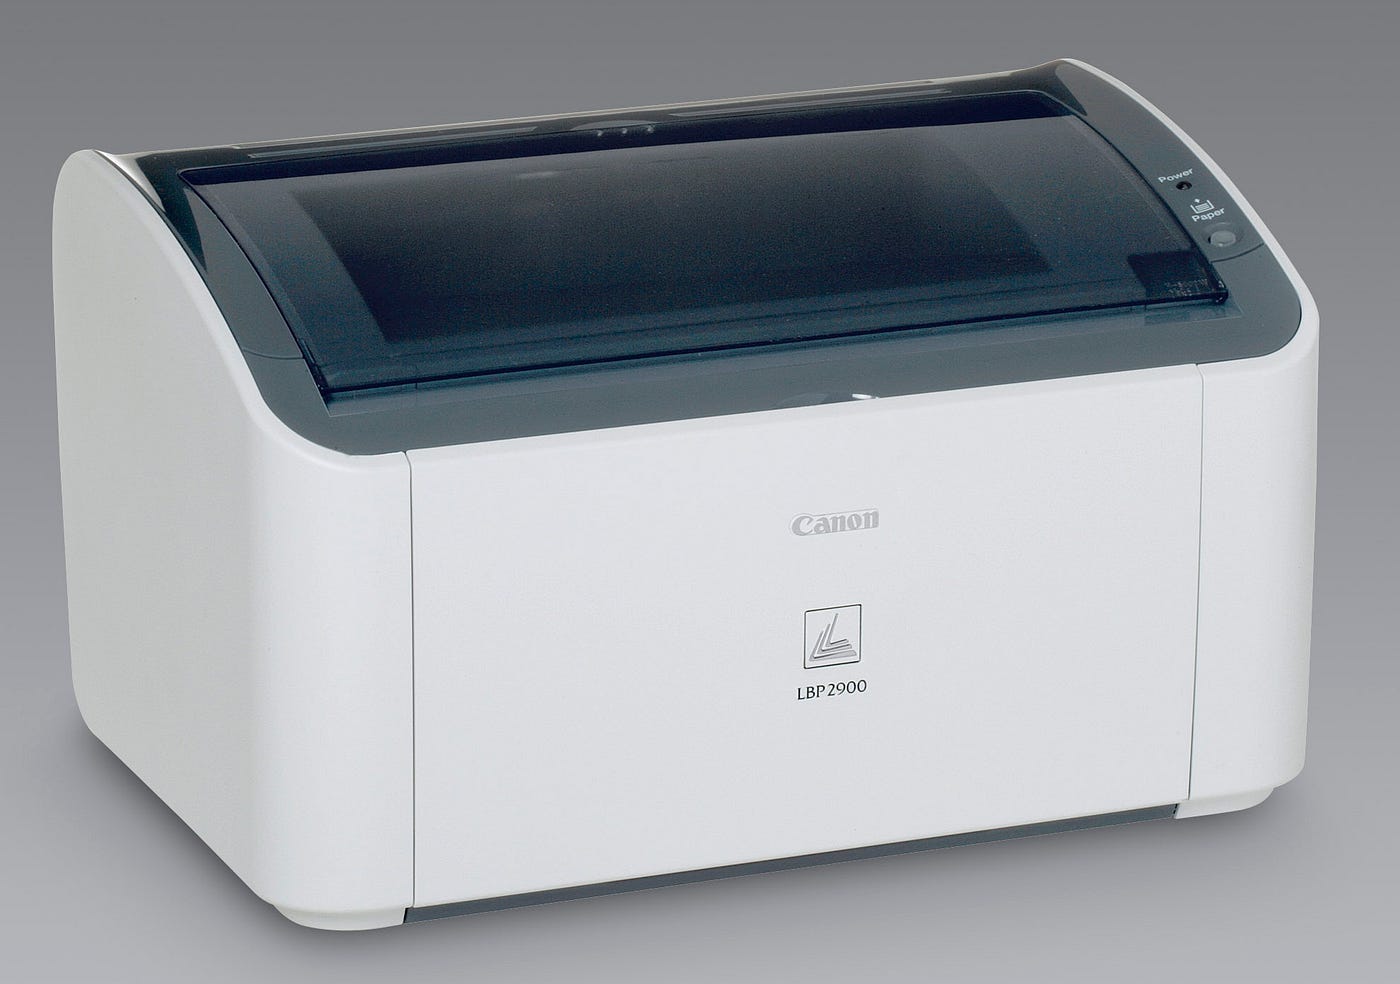 How to Install Canon Printer LBP 2900b? [Windows 10 & Mac] | by  Steffanwelsh | Medium